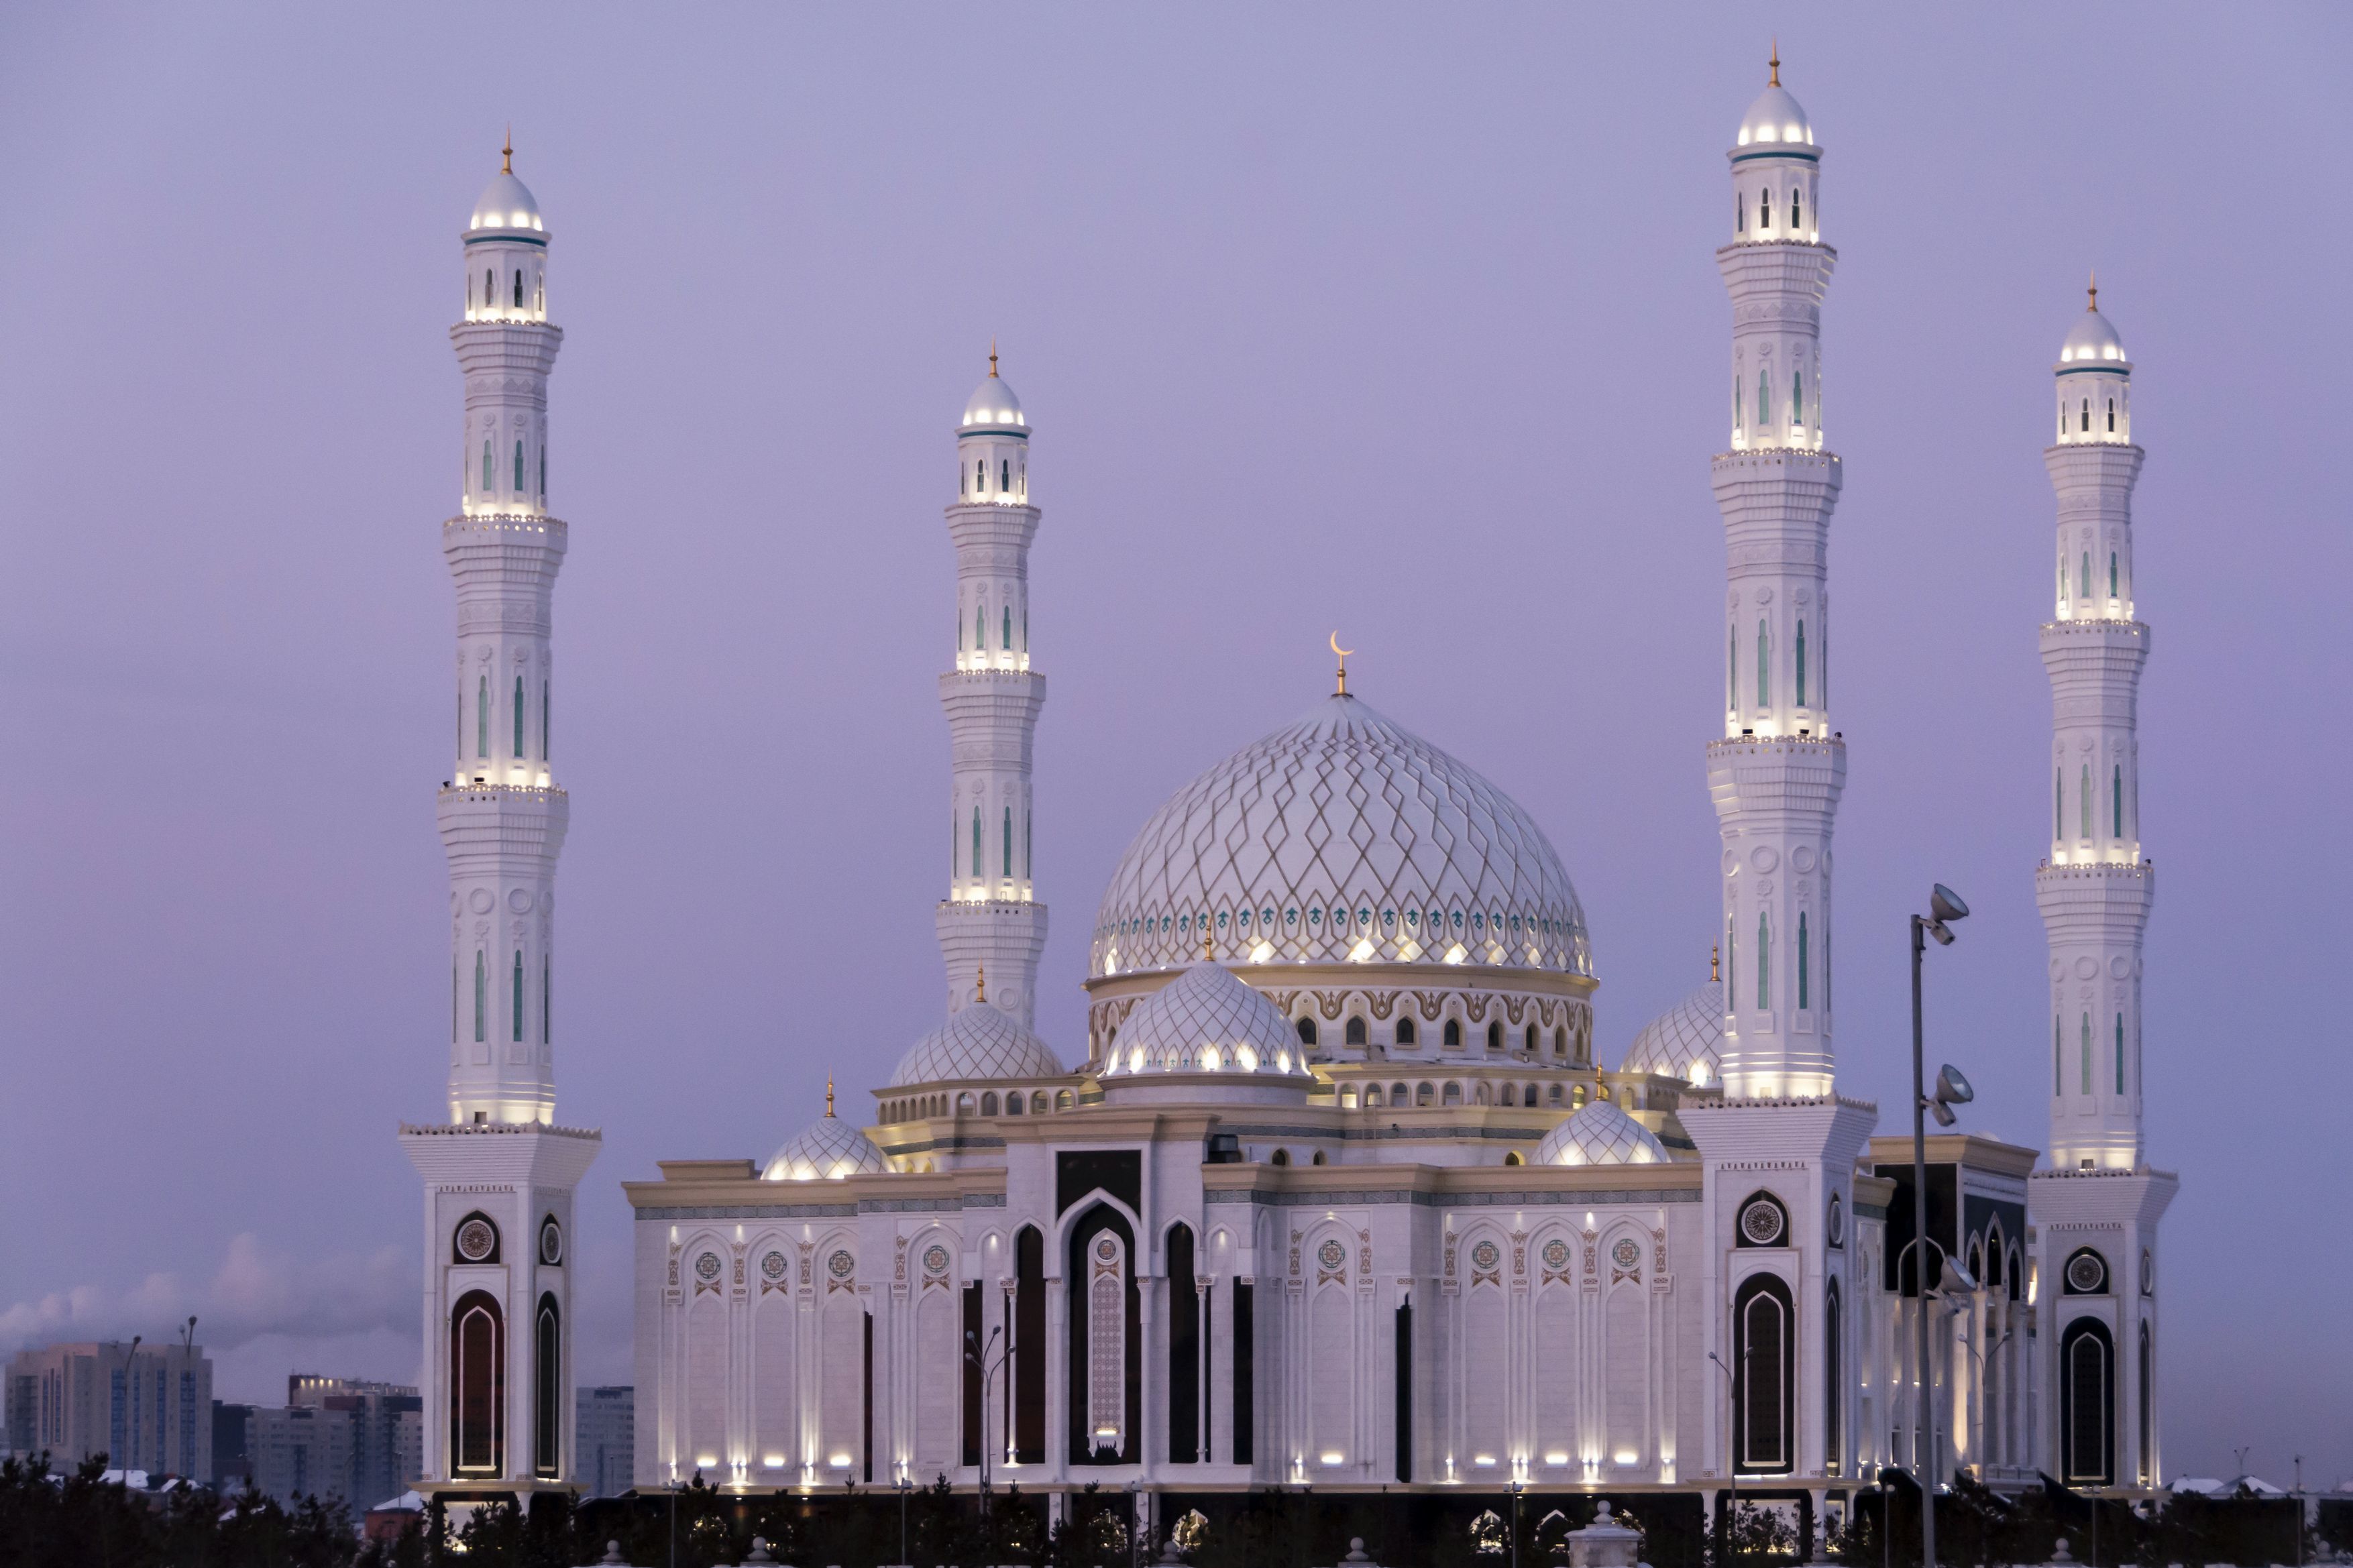 The Hazrat Sultan Mosque is a well-known landmark in Astana, Kazakhstan. /CFP